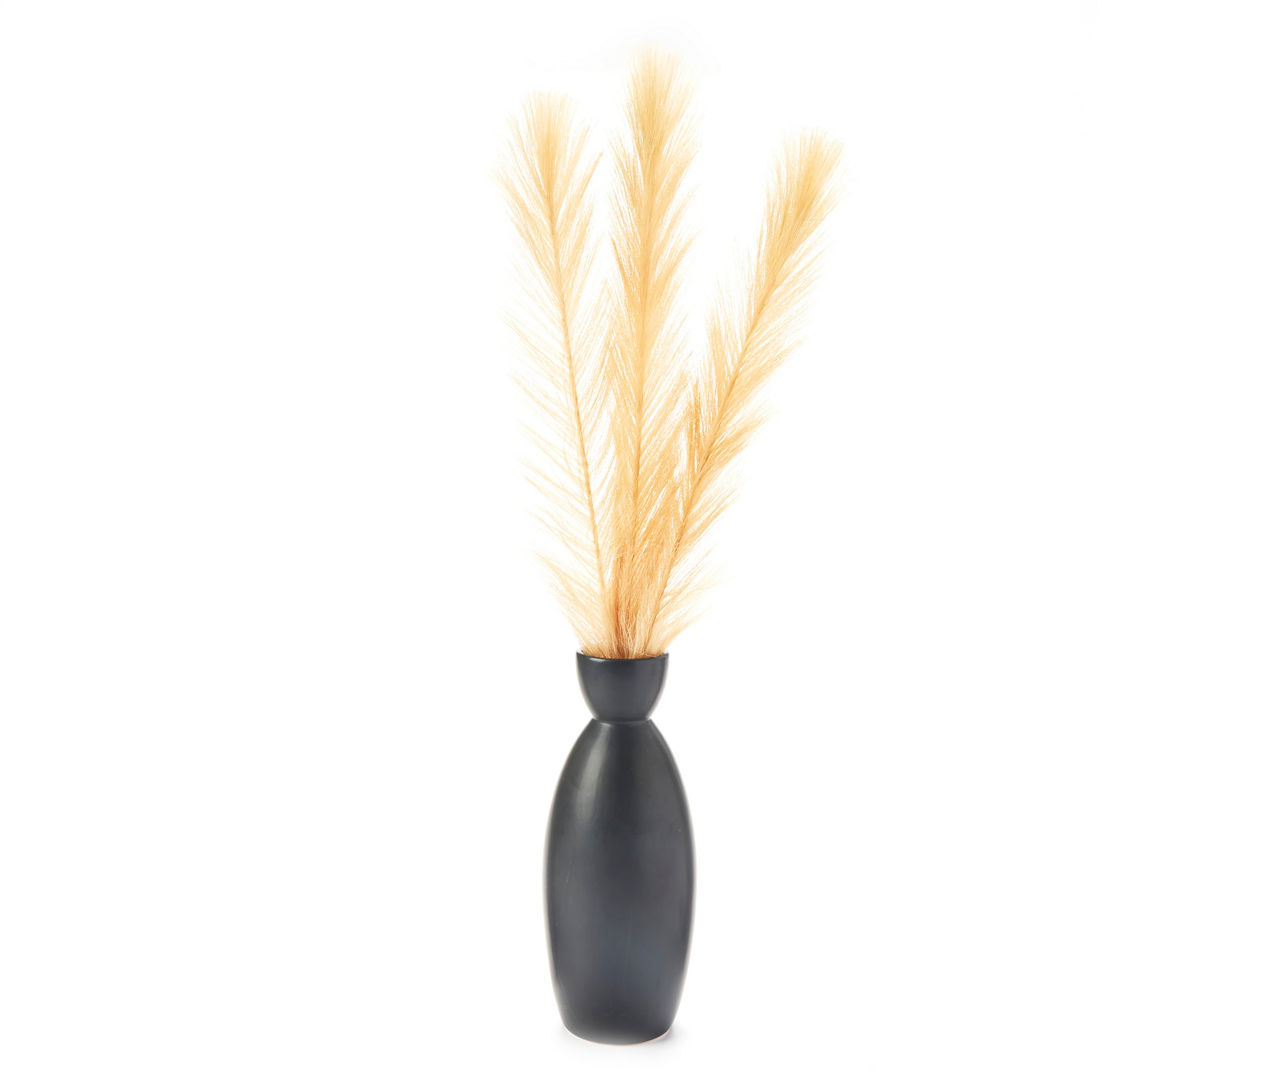 Black Pampas Grass In Vase